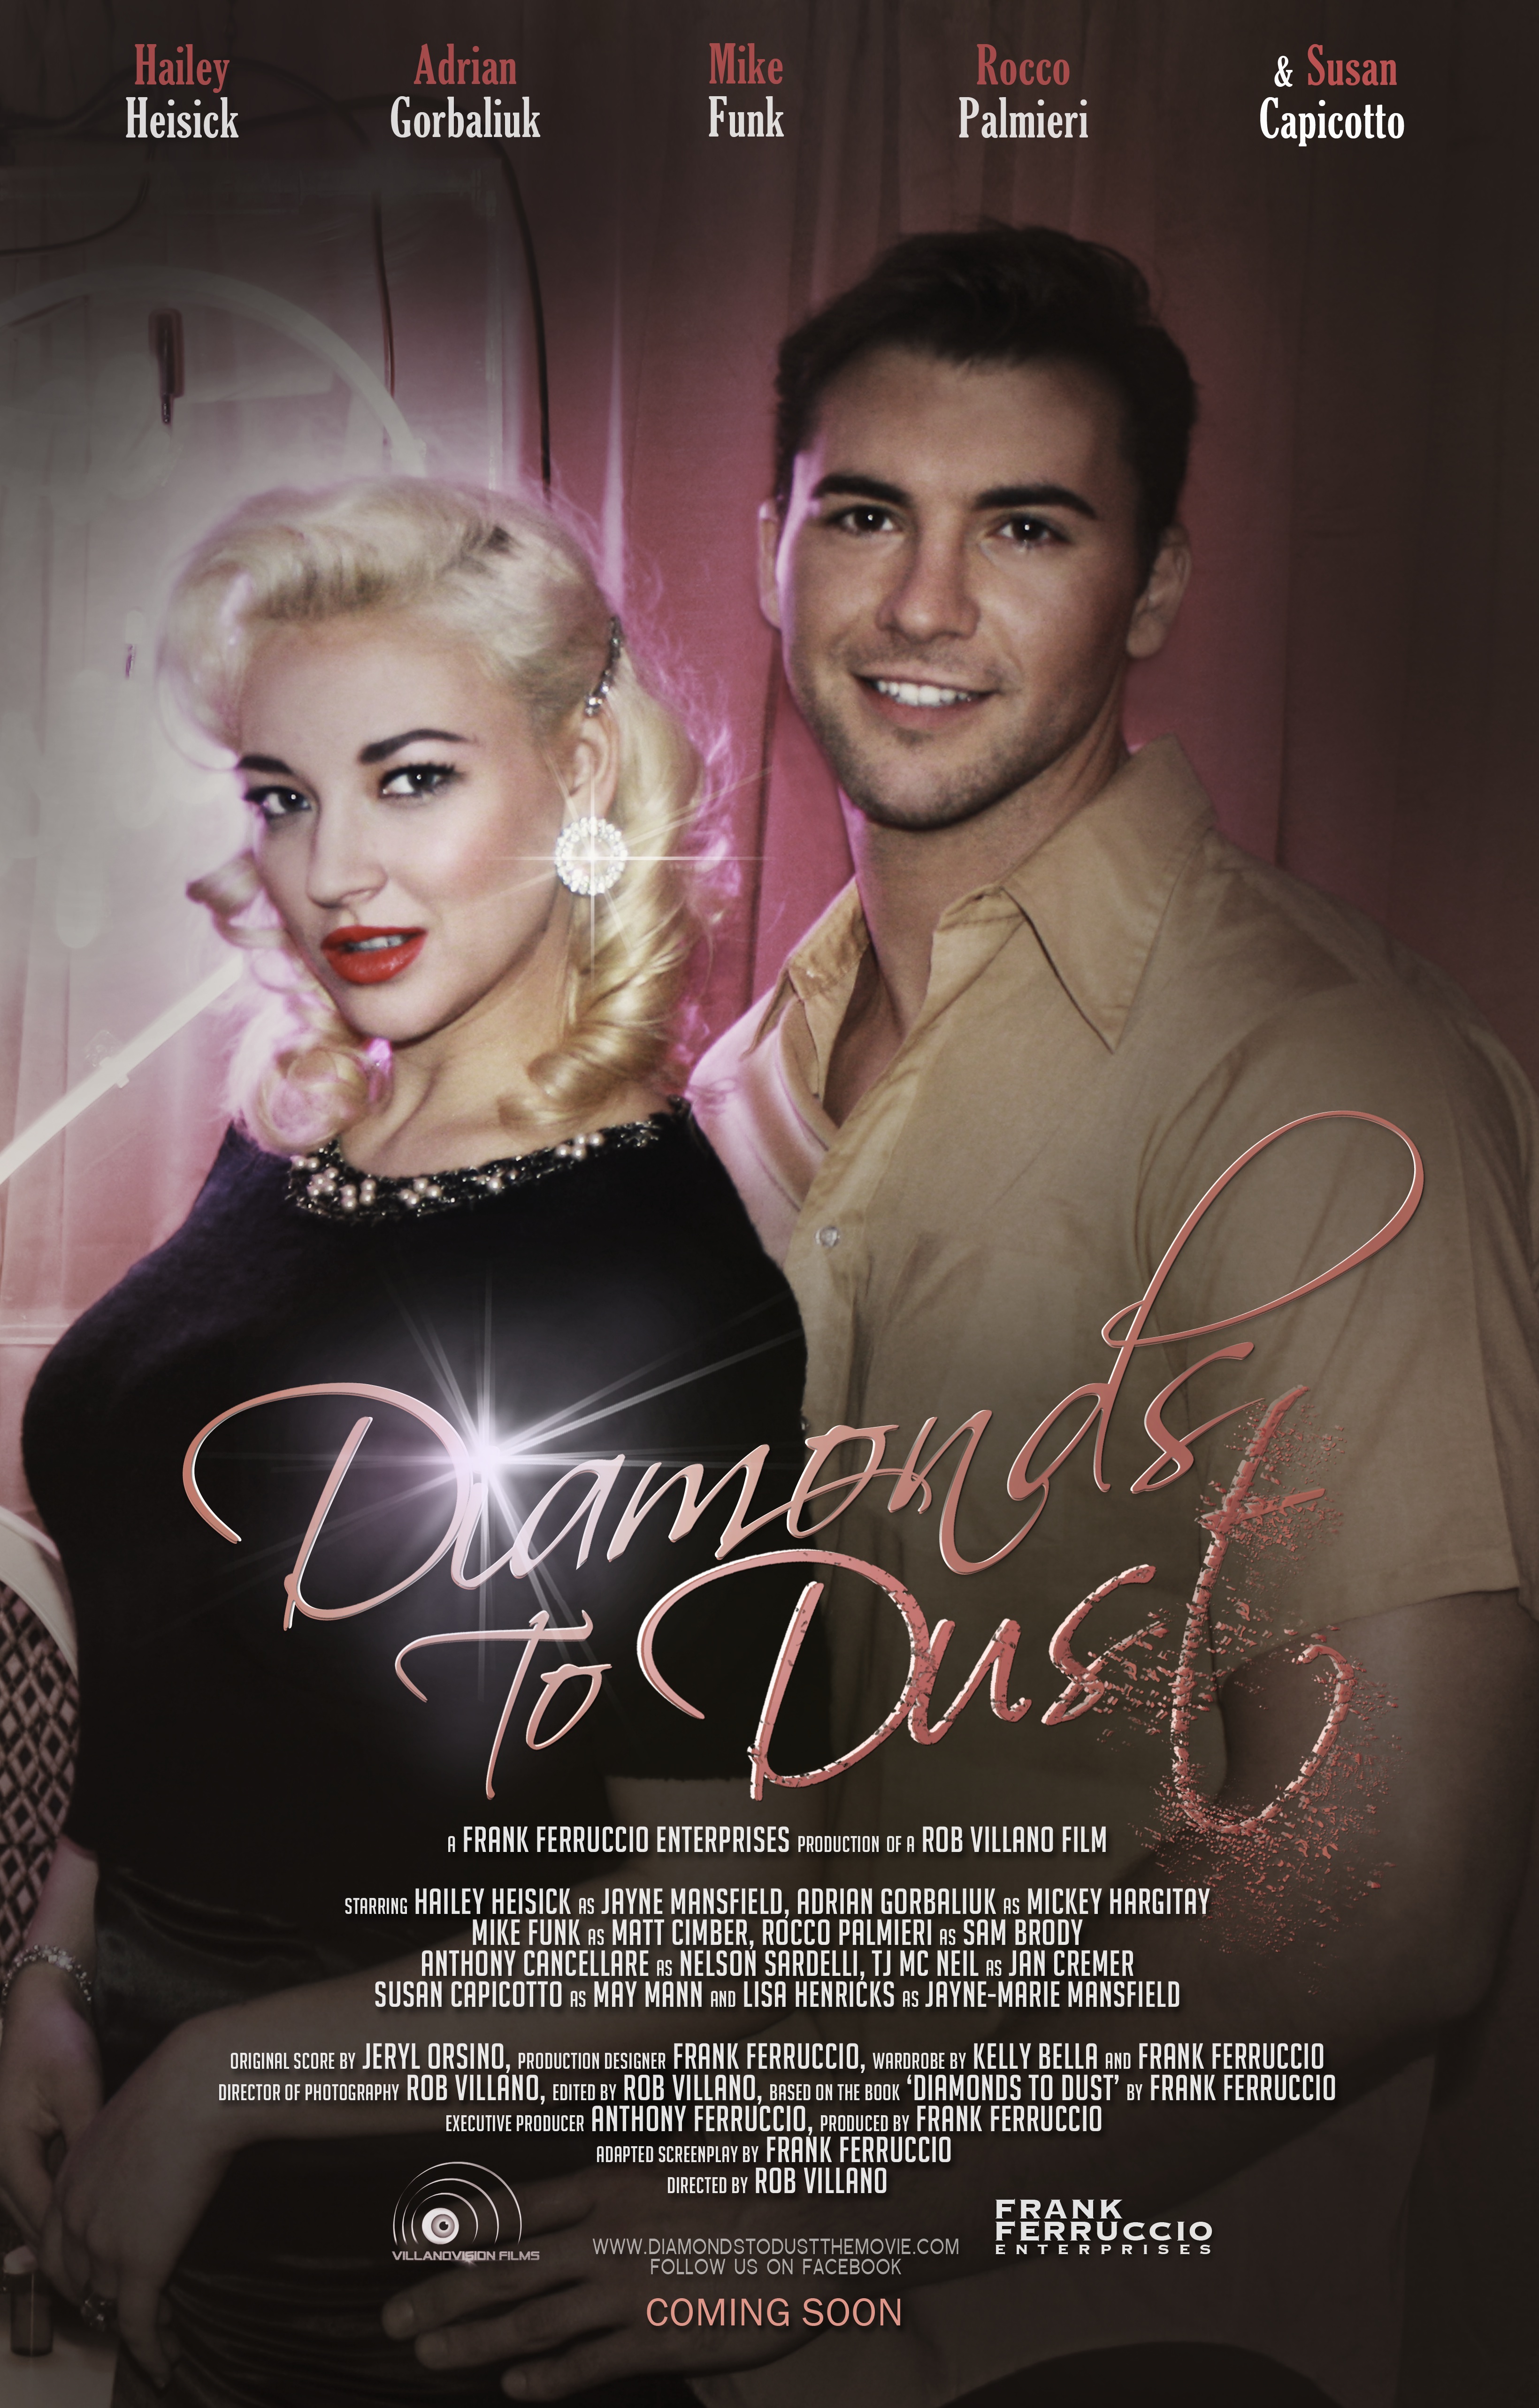 Adrian Gorbaliuk and Hailey Heisick 'Diamonds to Dust' Poster